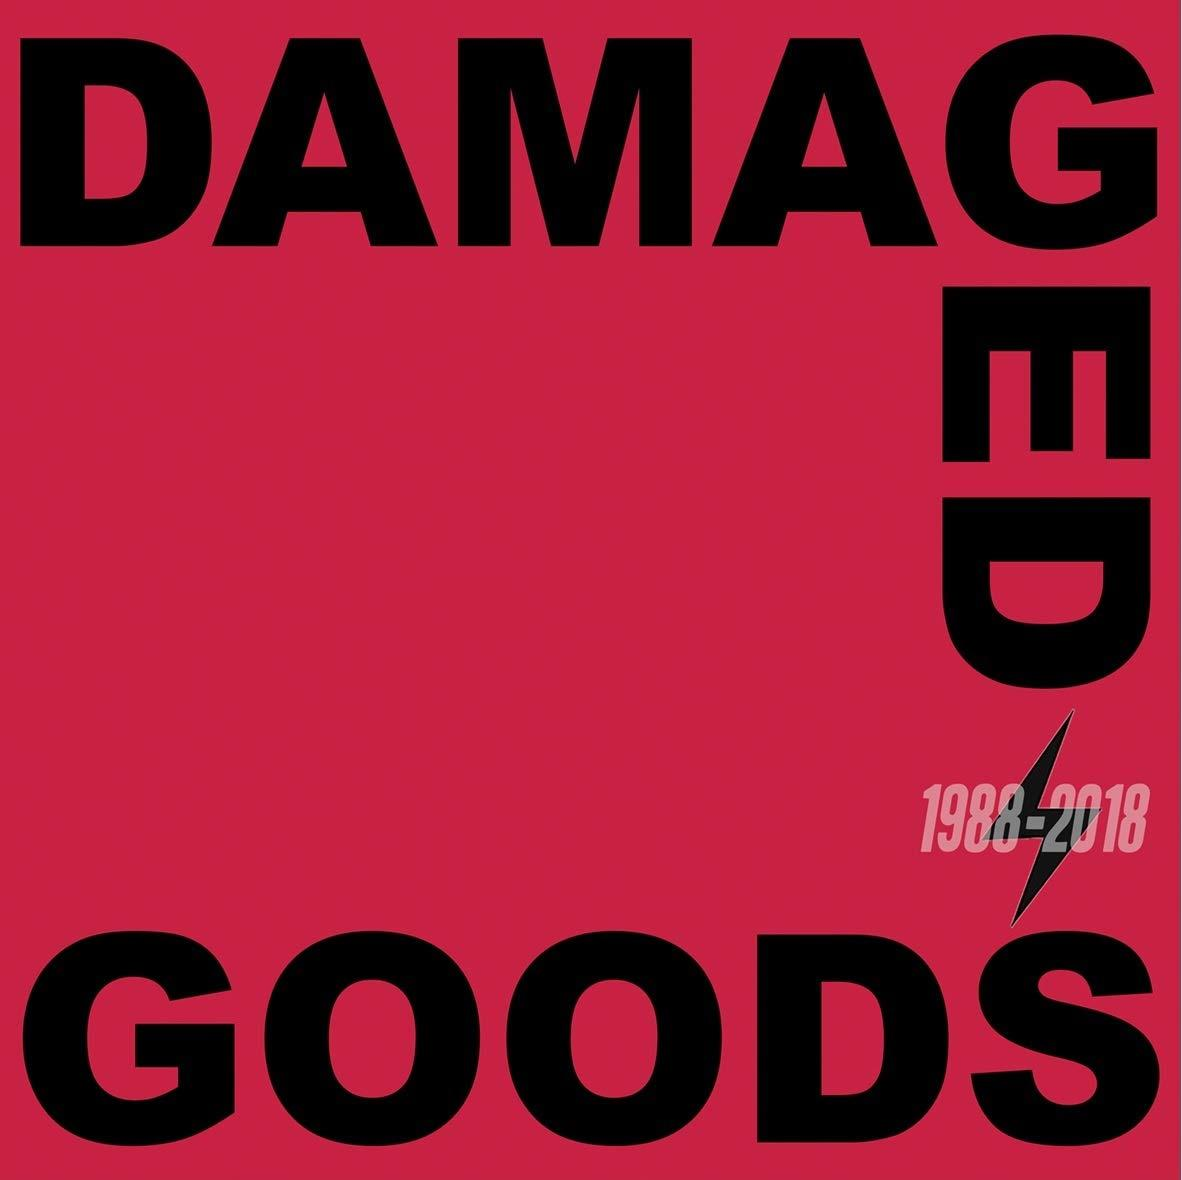 Goods VARIOUS 1988-2018 - - Damaged (Vinyl)